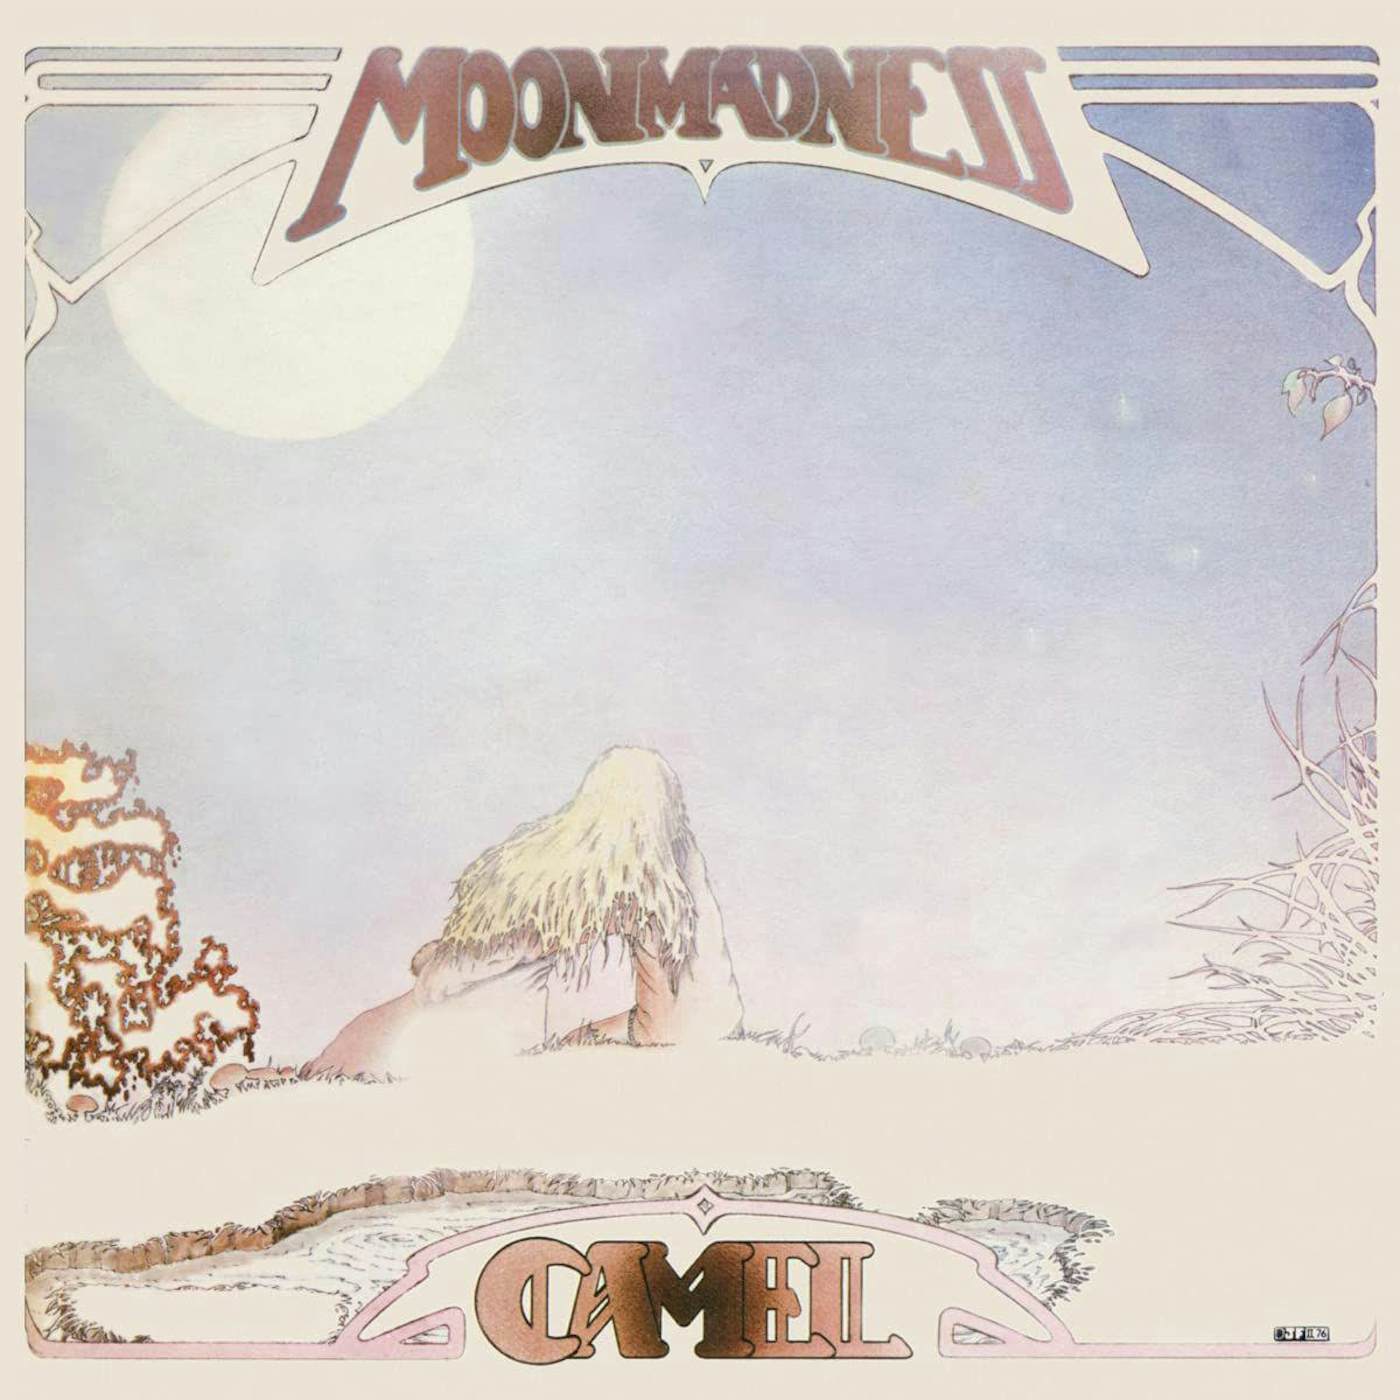 Camel Moonmadness Vinyl Record